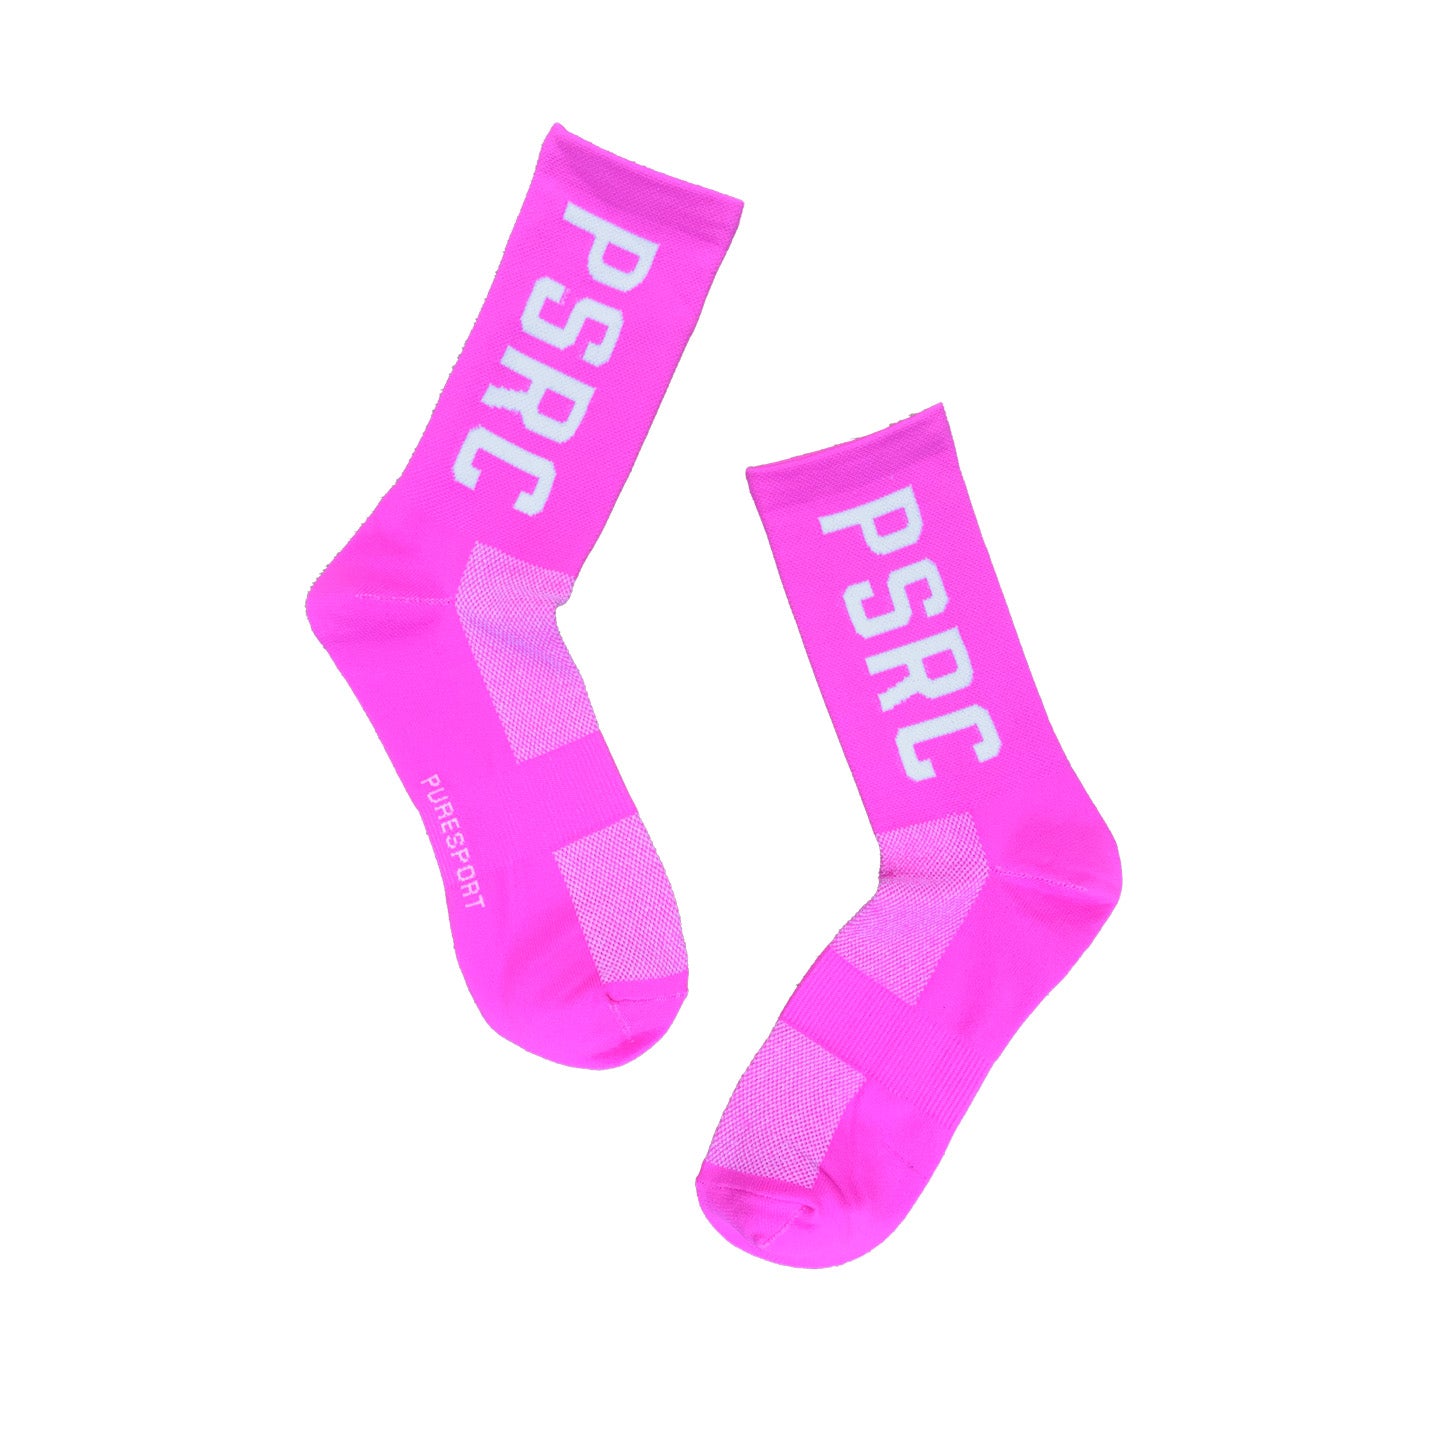 PSRC - Performance Socks - Pink with Bold White PSRC